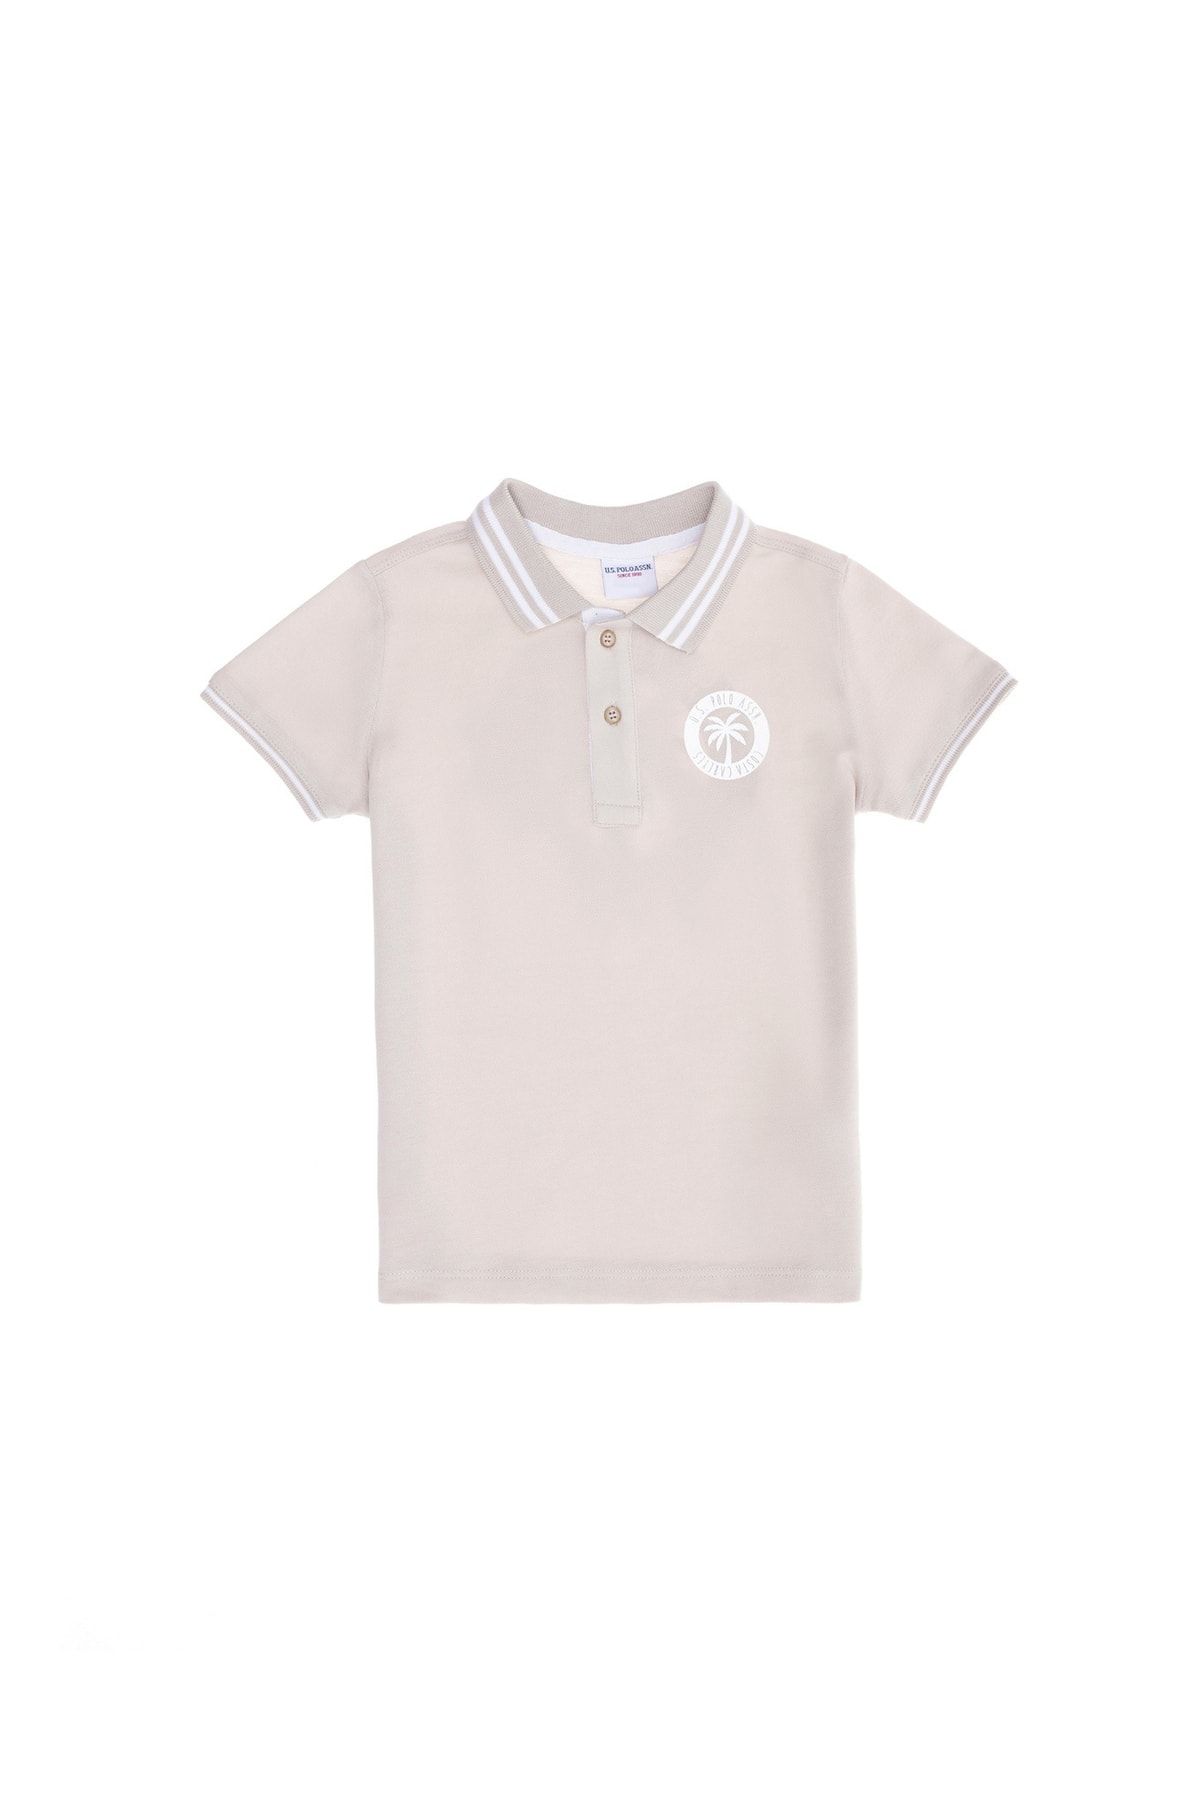 U.S. Polo Assn. Düz Gri Erkek Çocuk T-shirt Costar